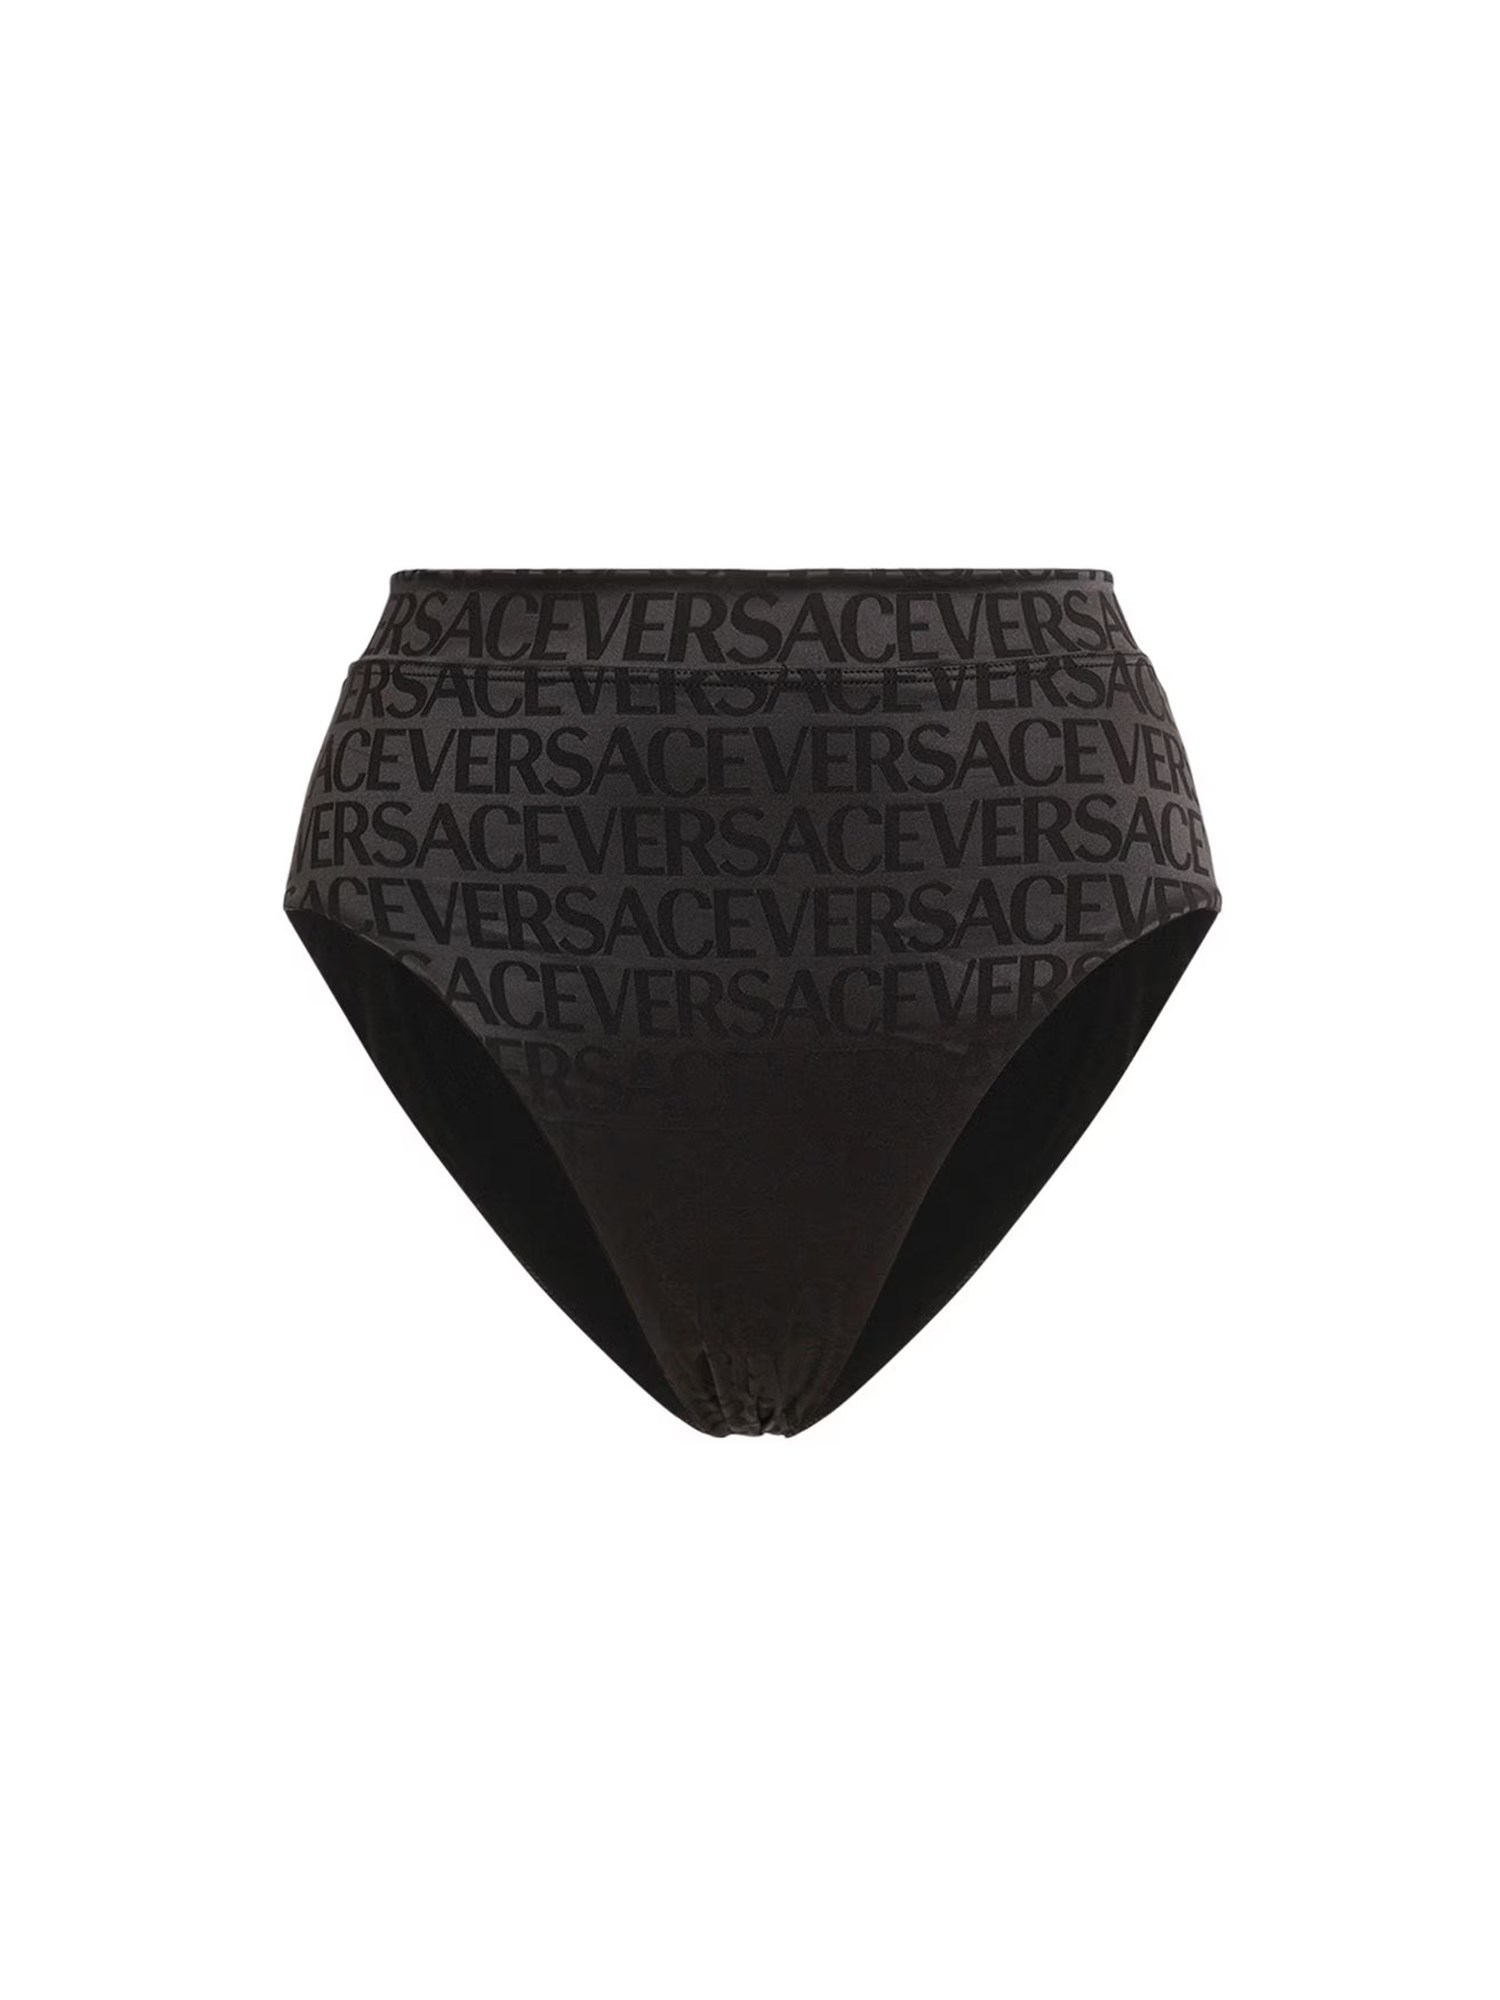 Versace versace all over logo briefs